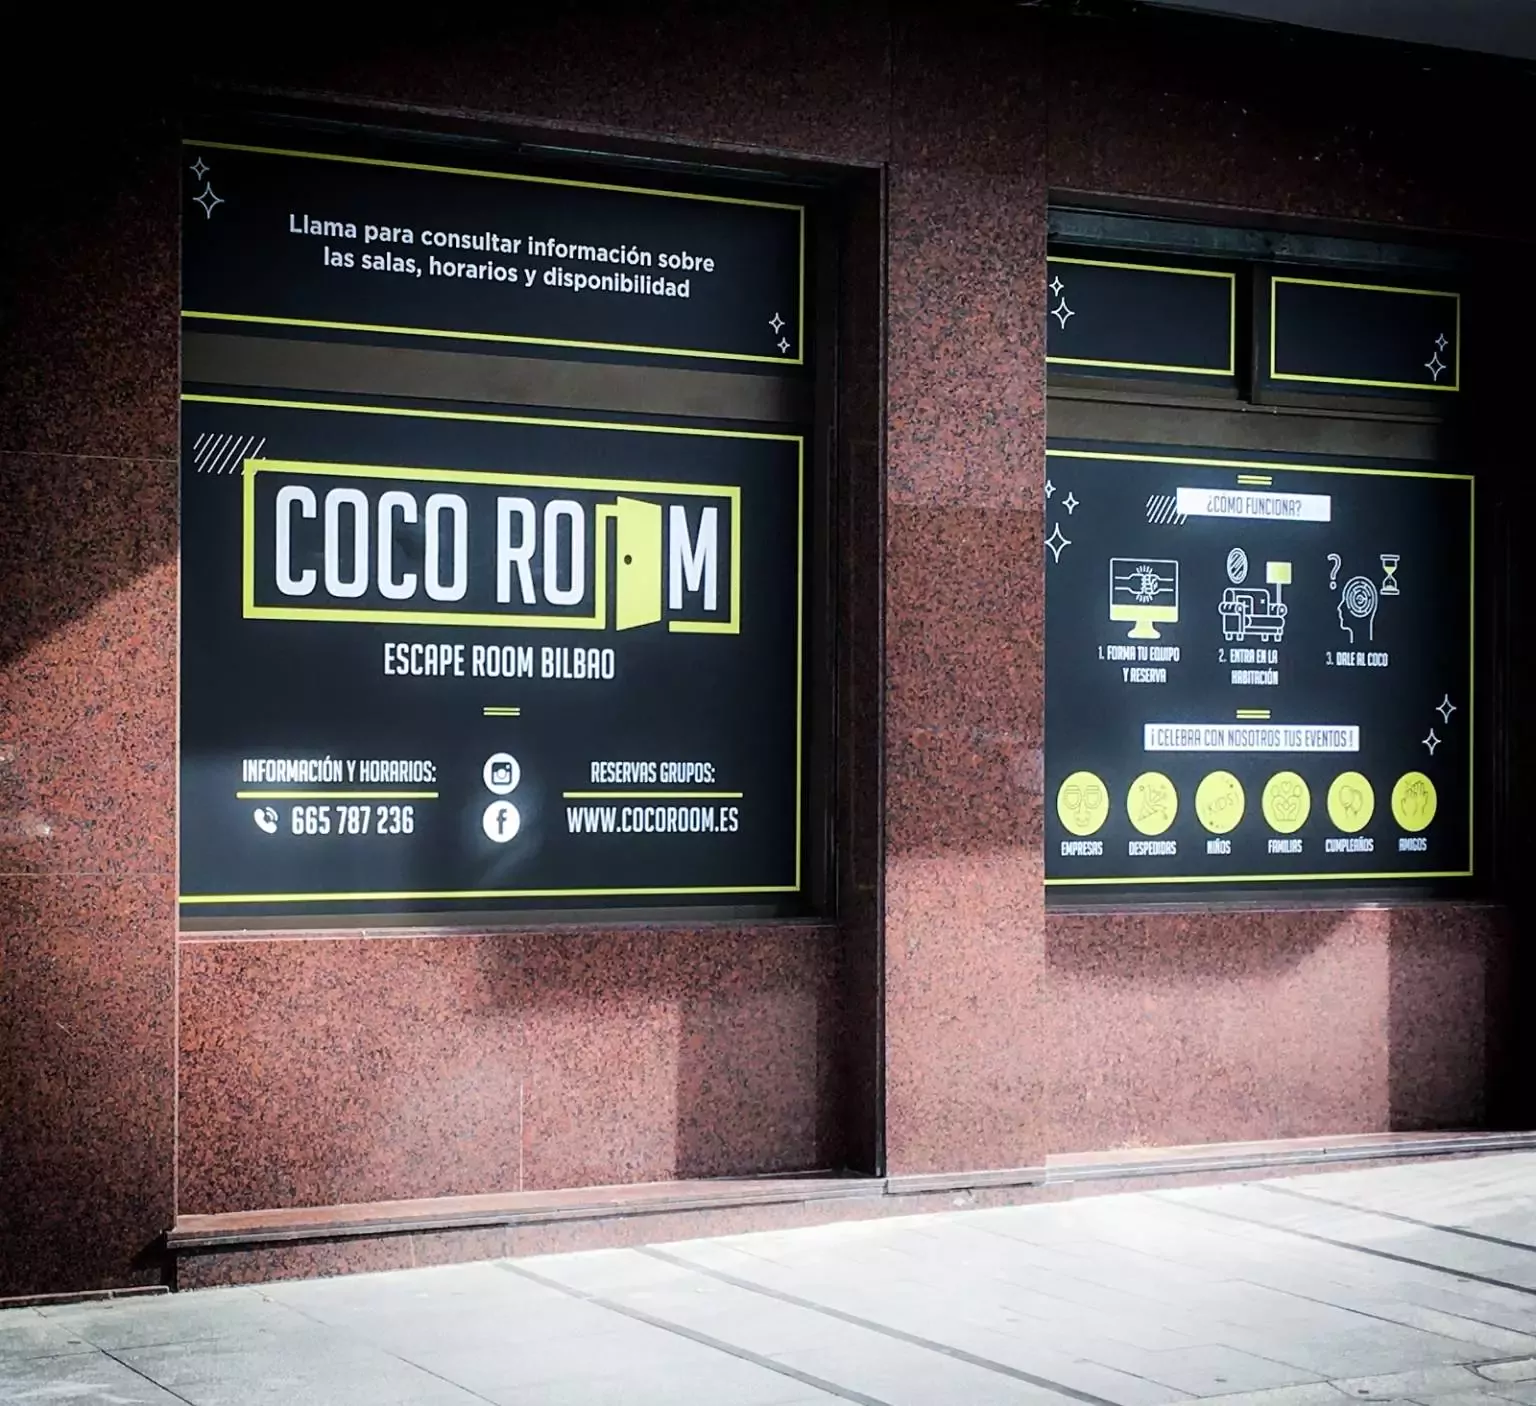 6. Escape Room  - Coco Room Bilbao